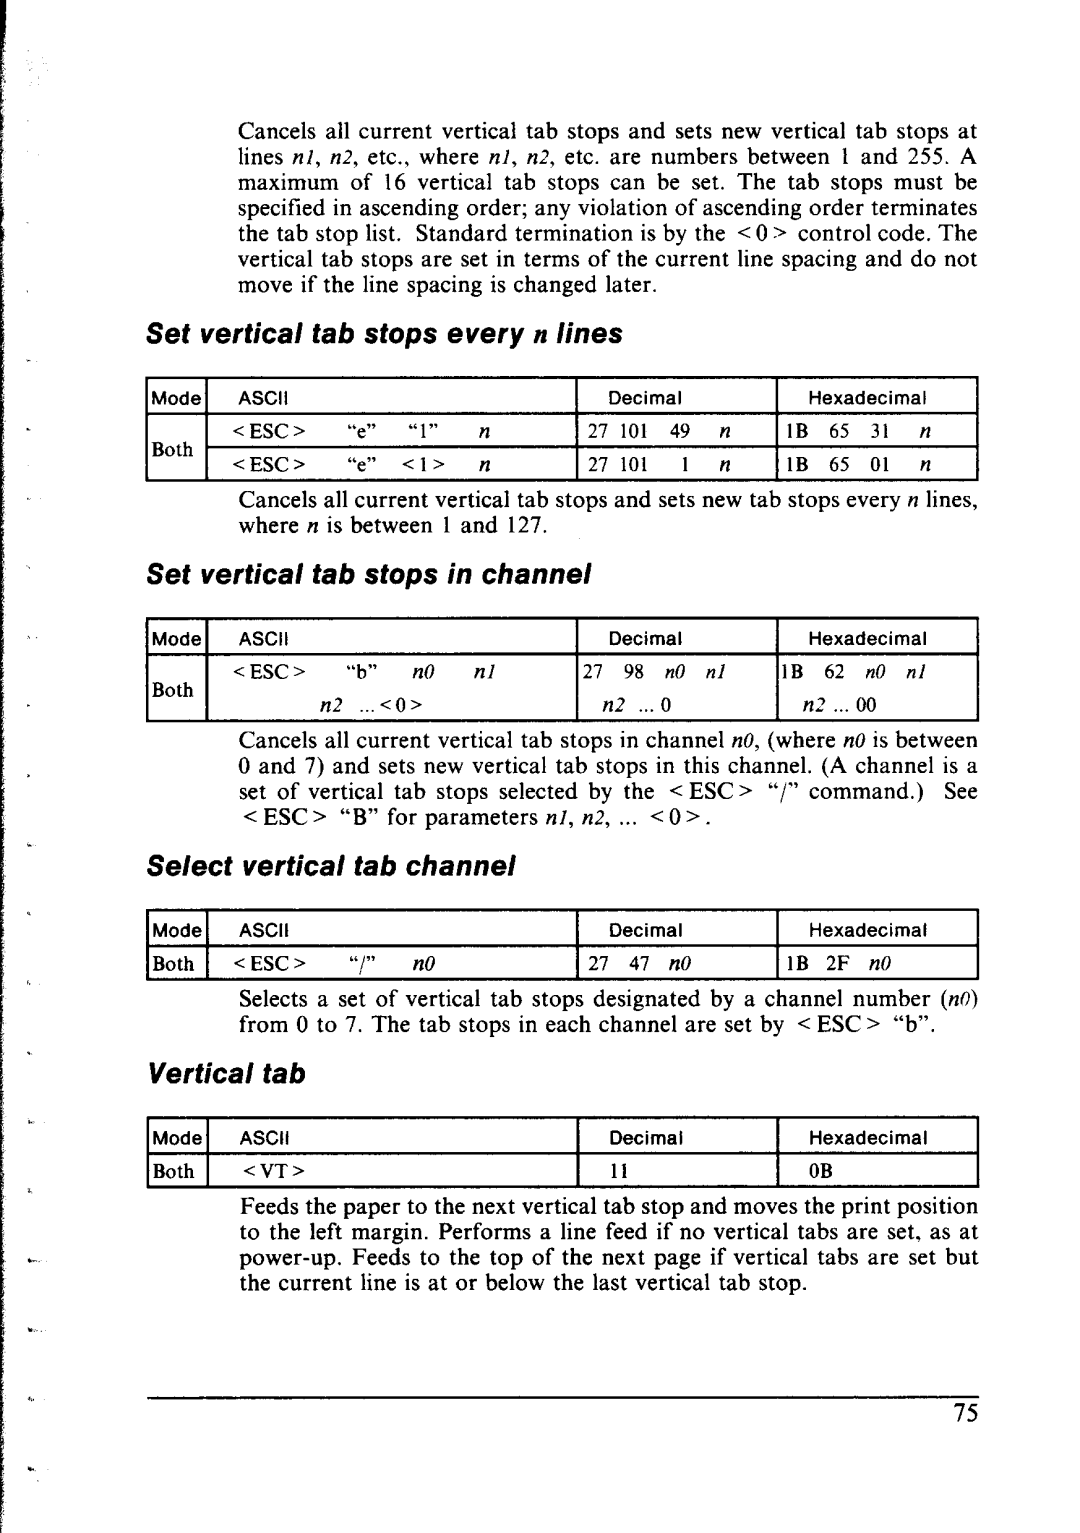 Star Micronics NX-1000 Set vertical tab stops every II lines, Set vertical tab stops in channel, Vertical tab, 27 47 n0 